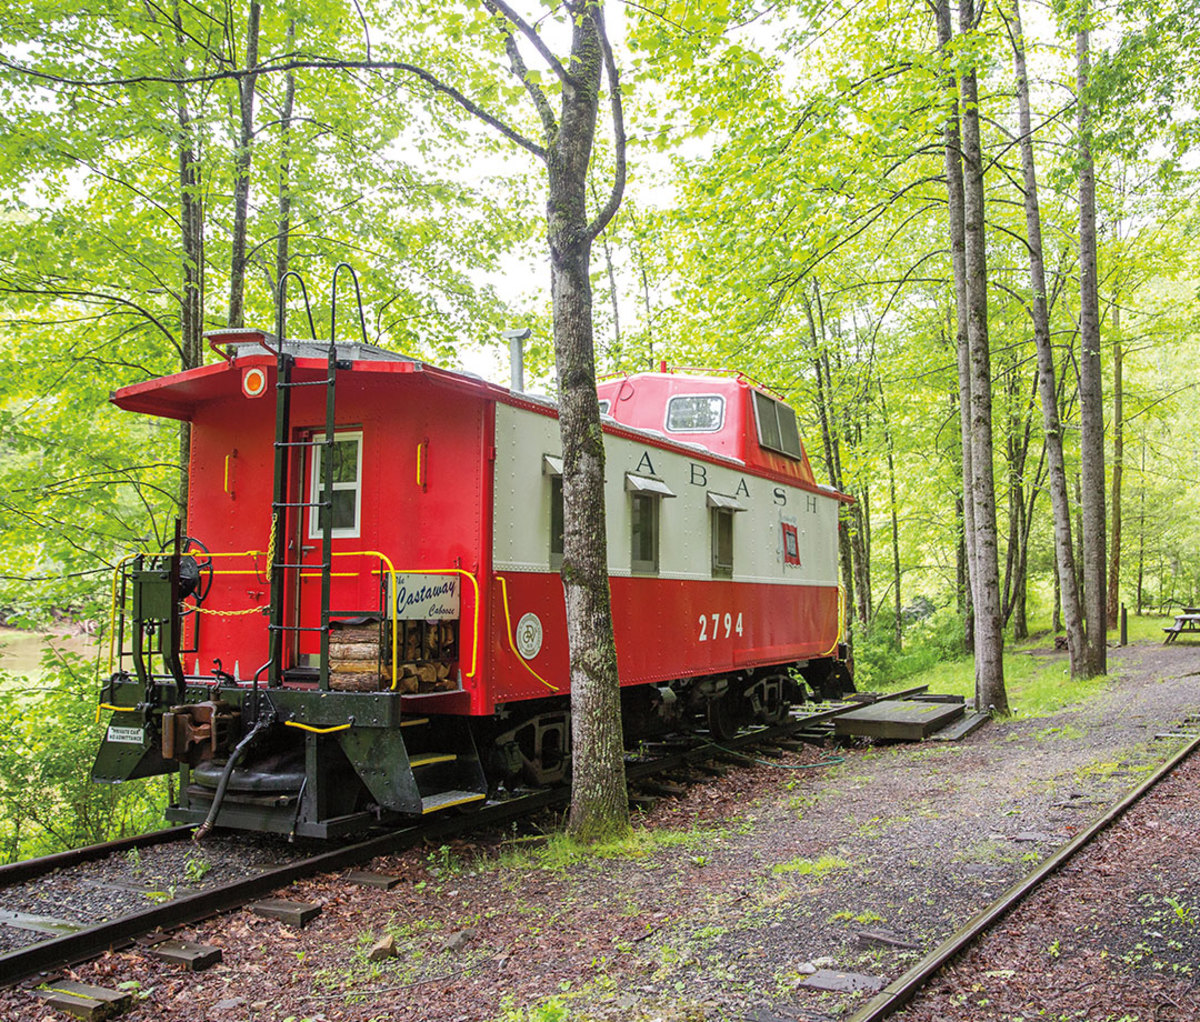 Train caboose in woods